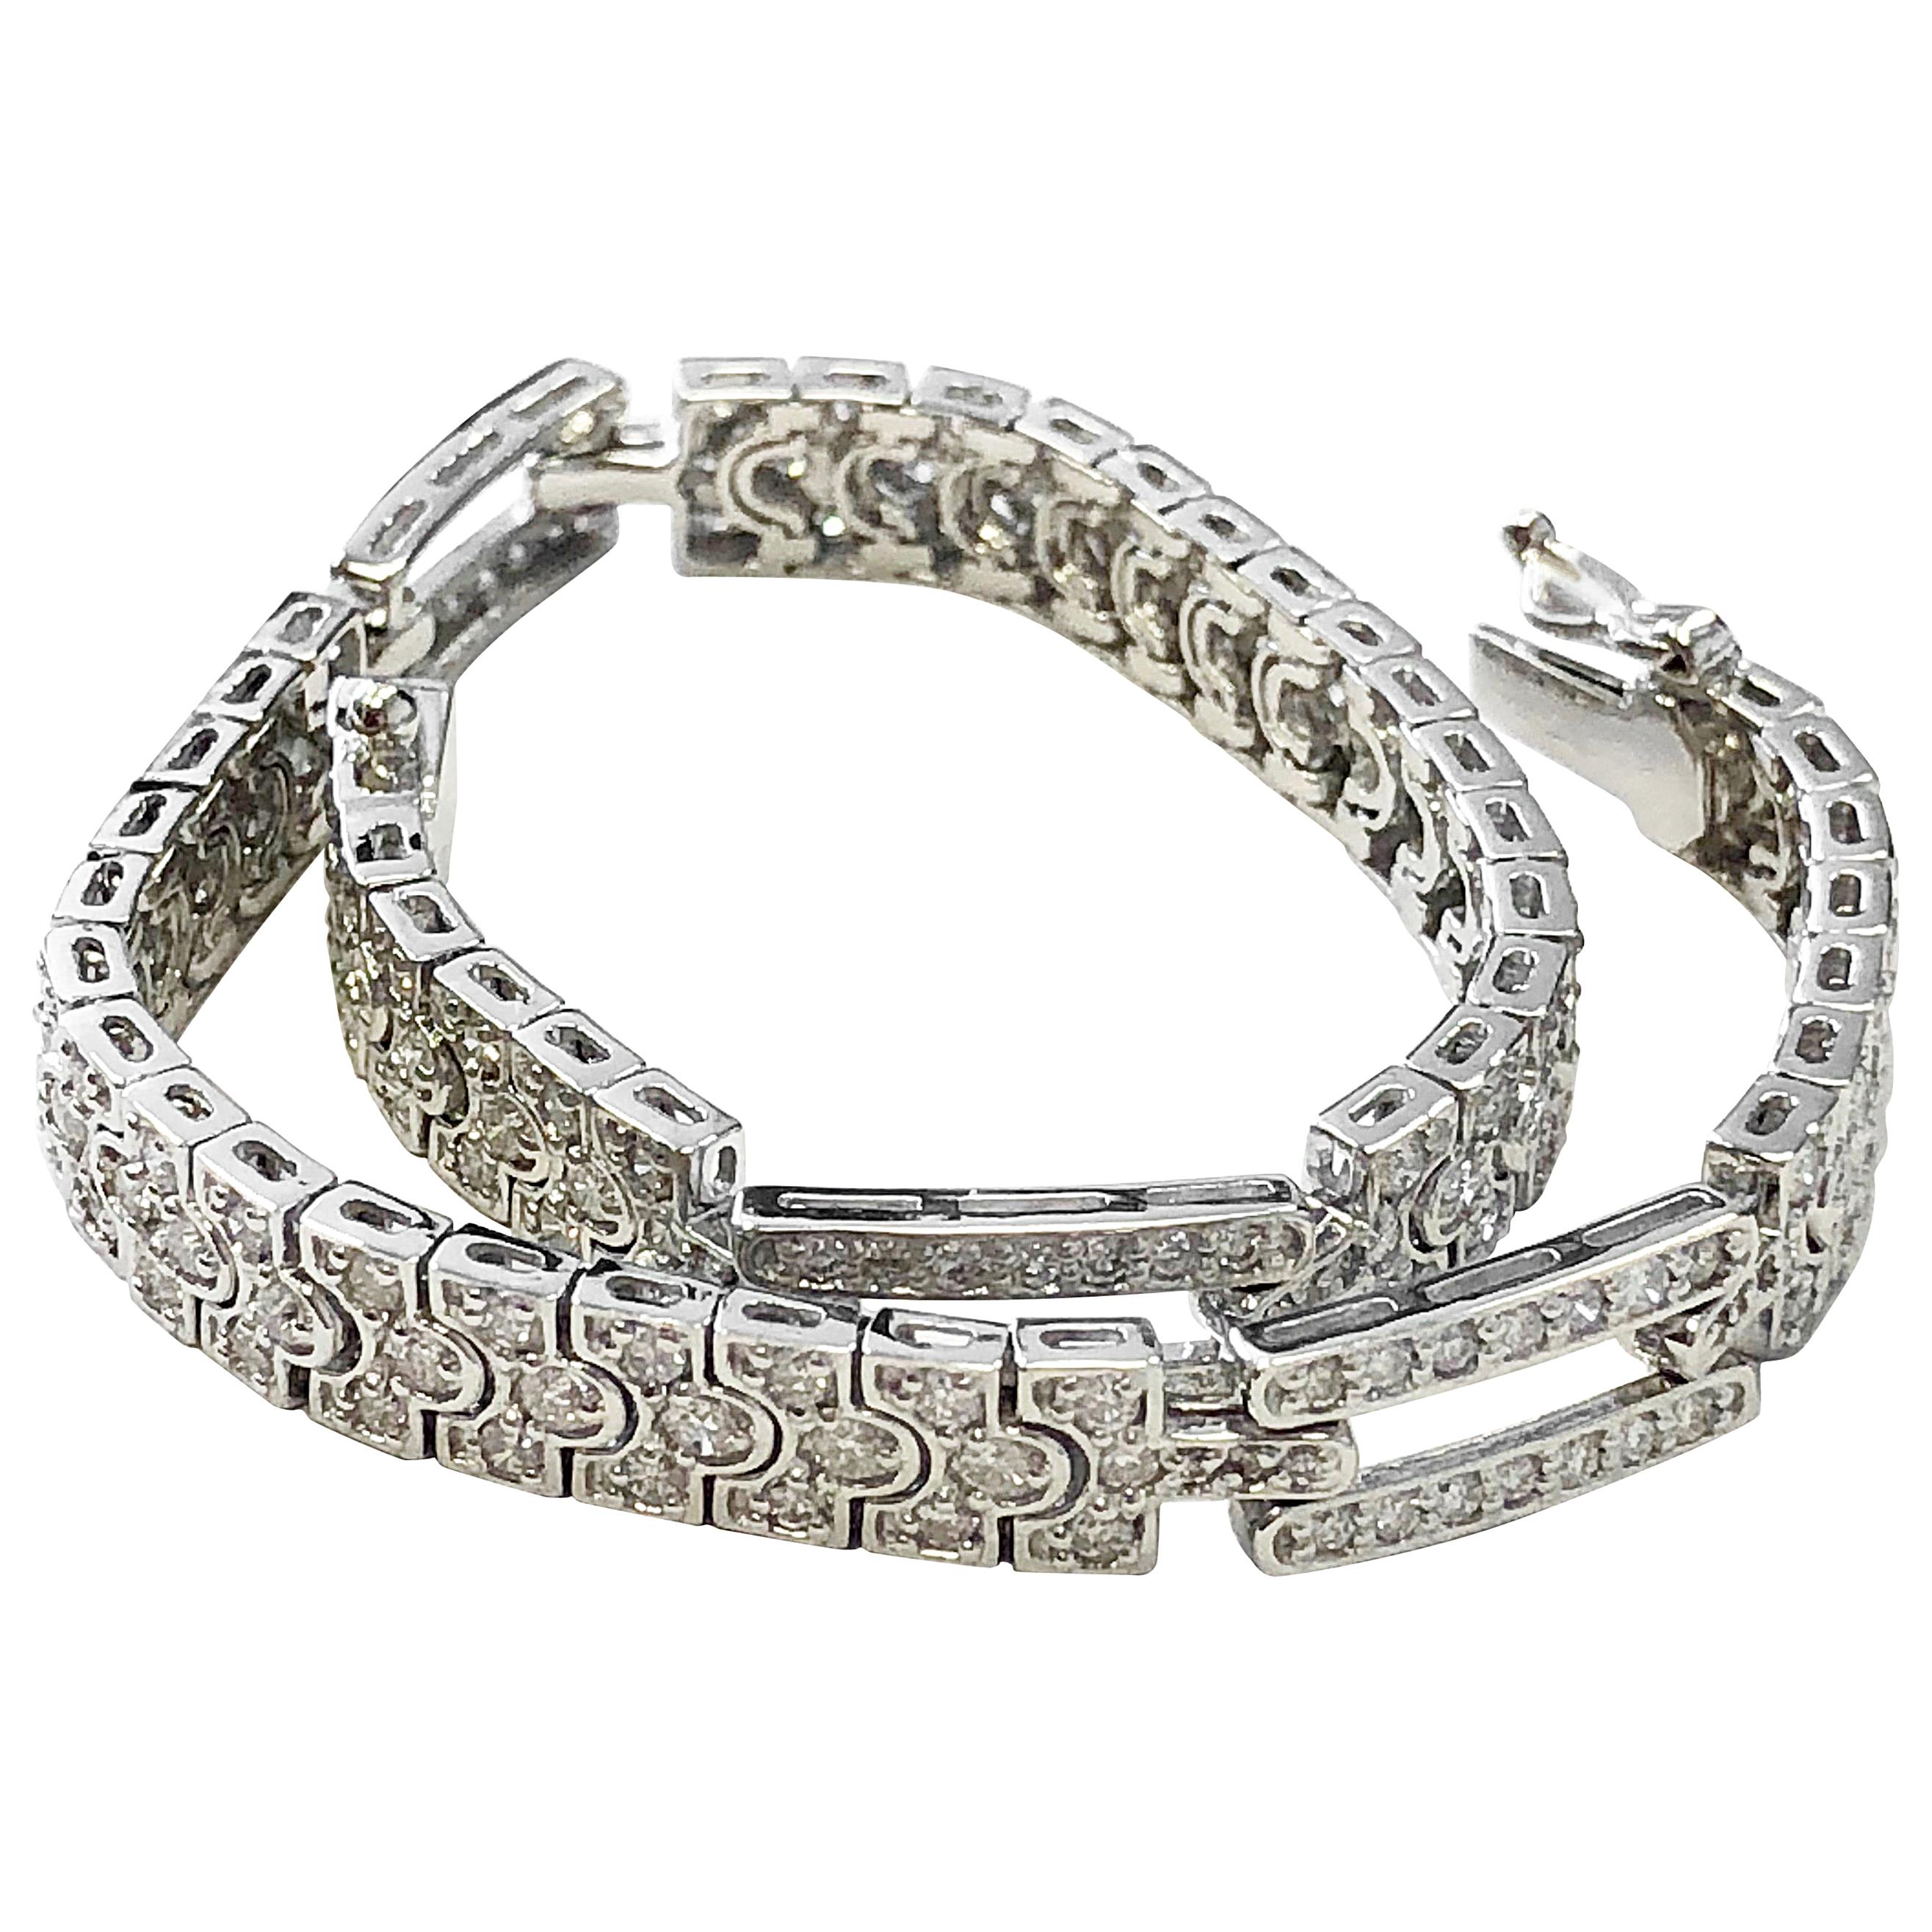 Art Deco Style Look Diamond Bracelet in 18 Karat White Gold